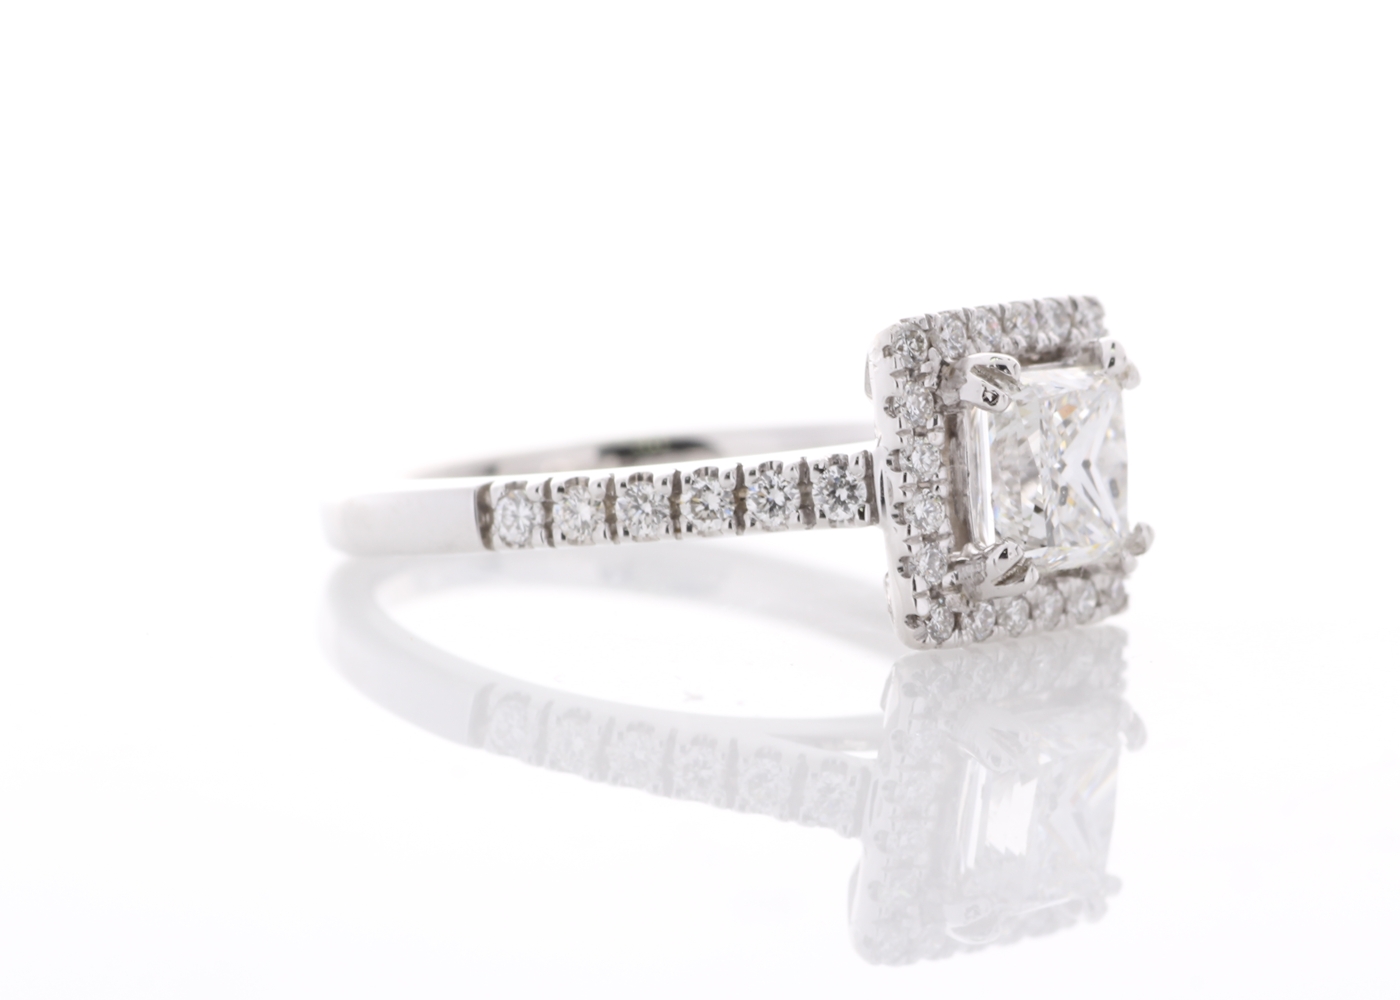 18ct White Gold Single Stone Princess Cut Diamond Ring (1.00) 1.34 Carats - Image 4 of 5